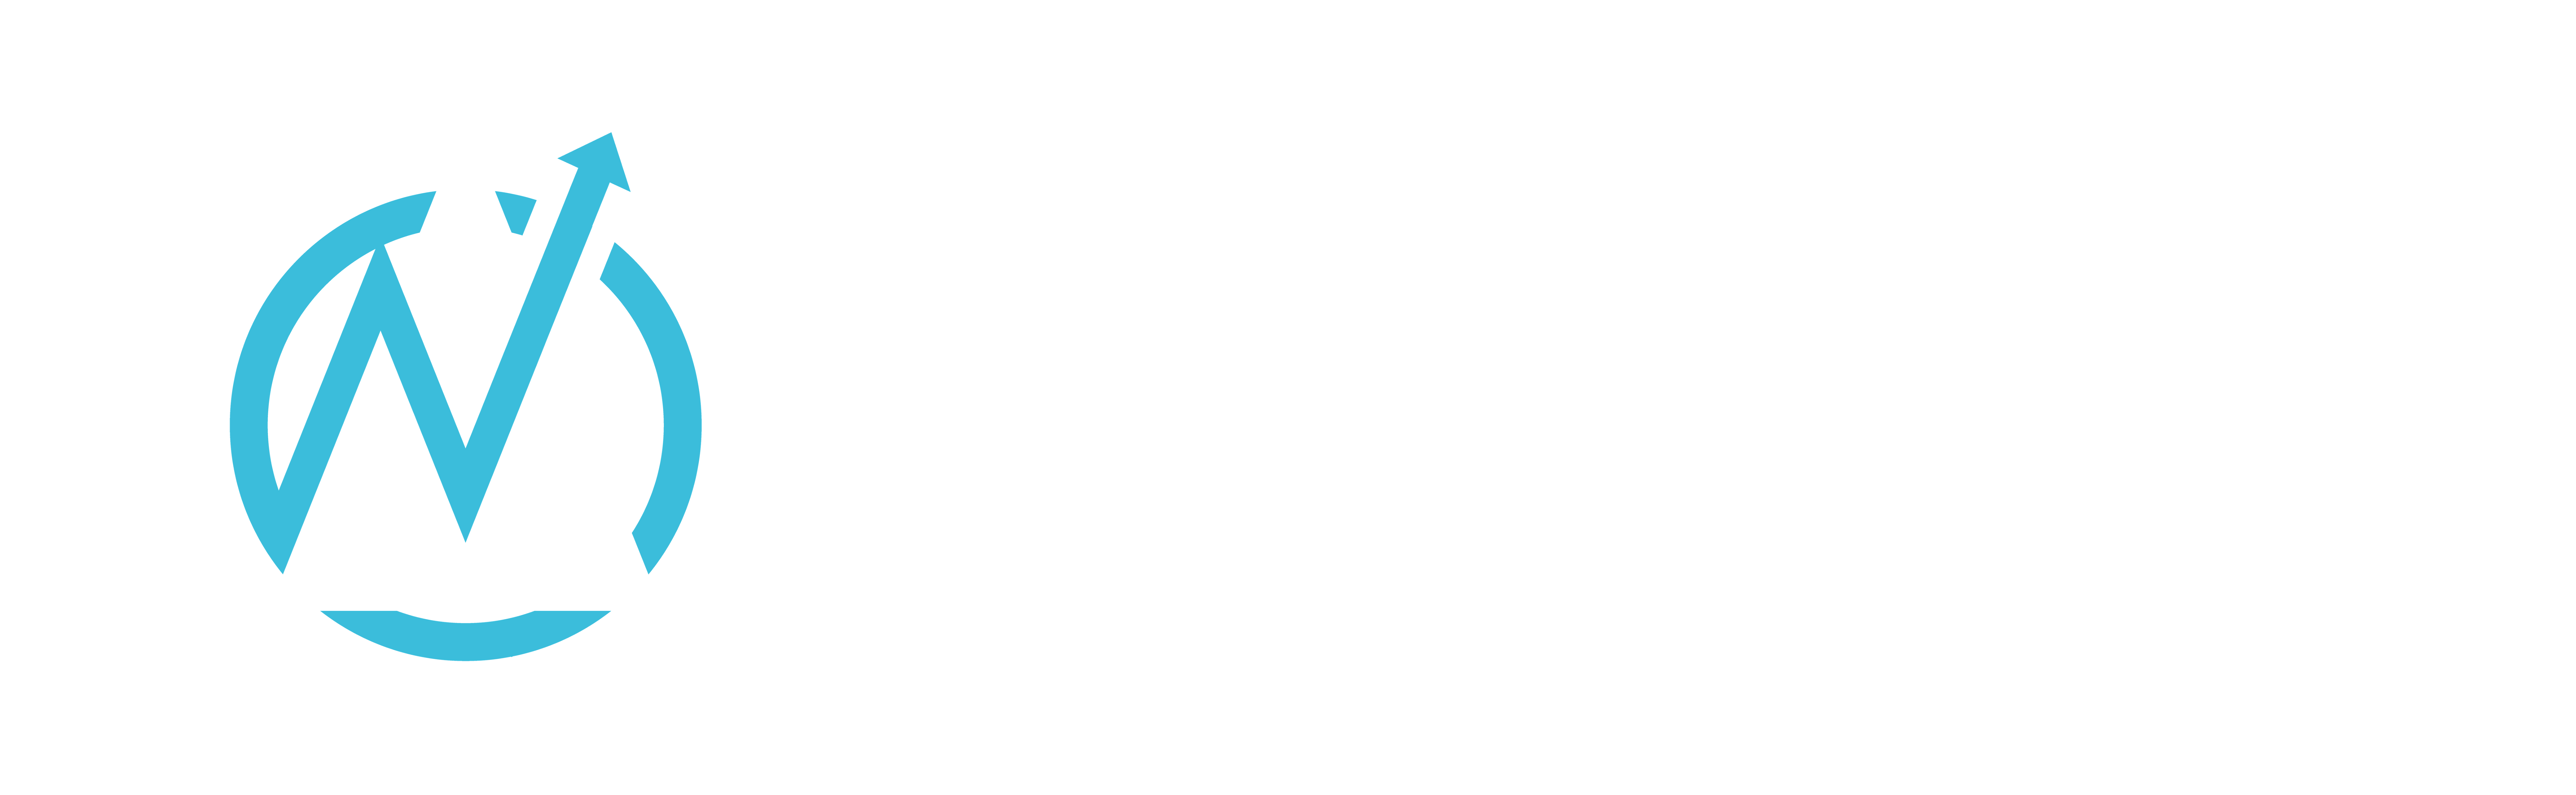 Copynation Oficial